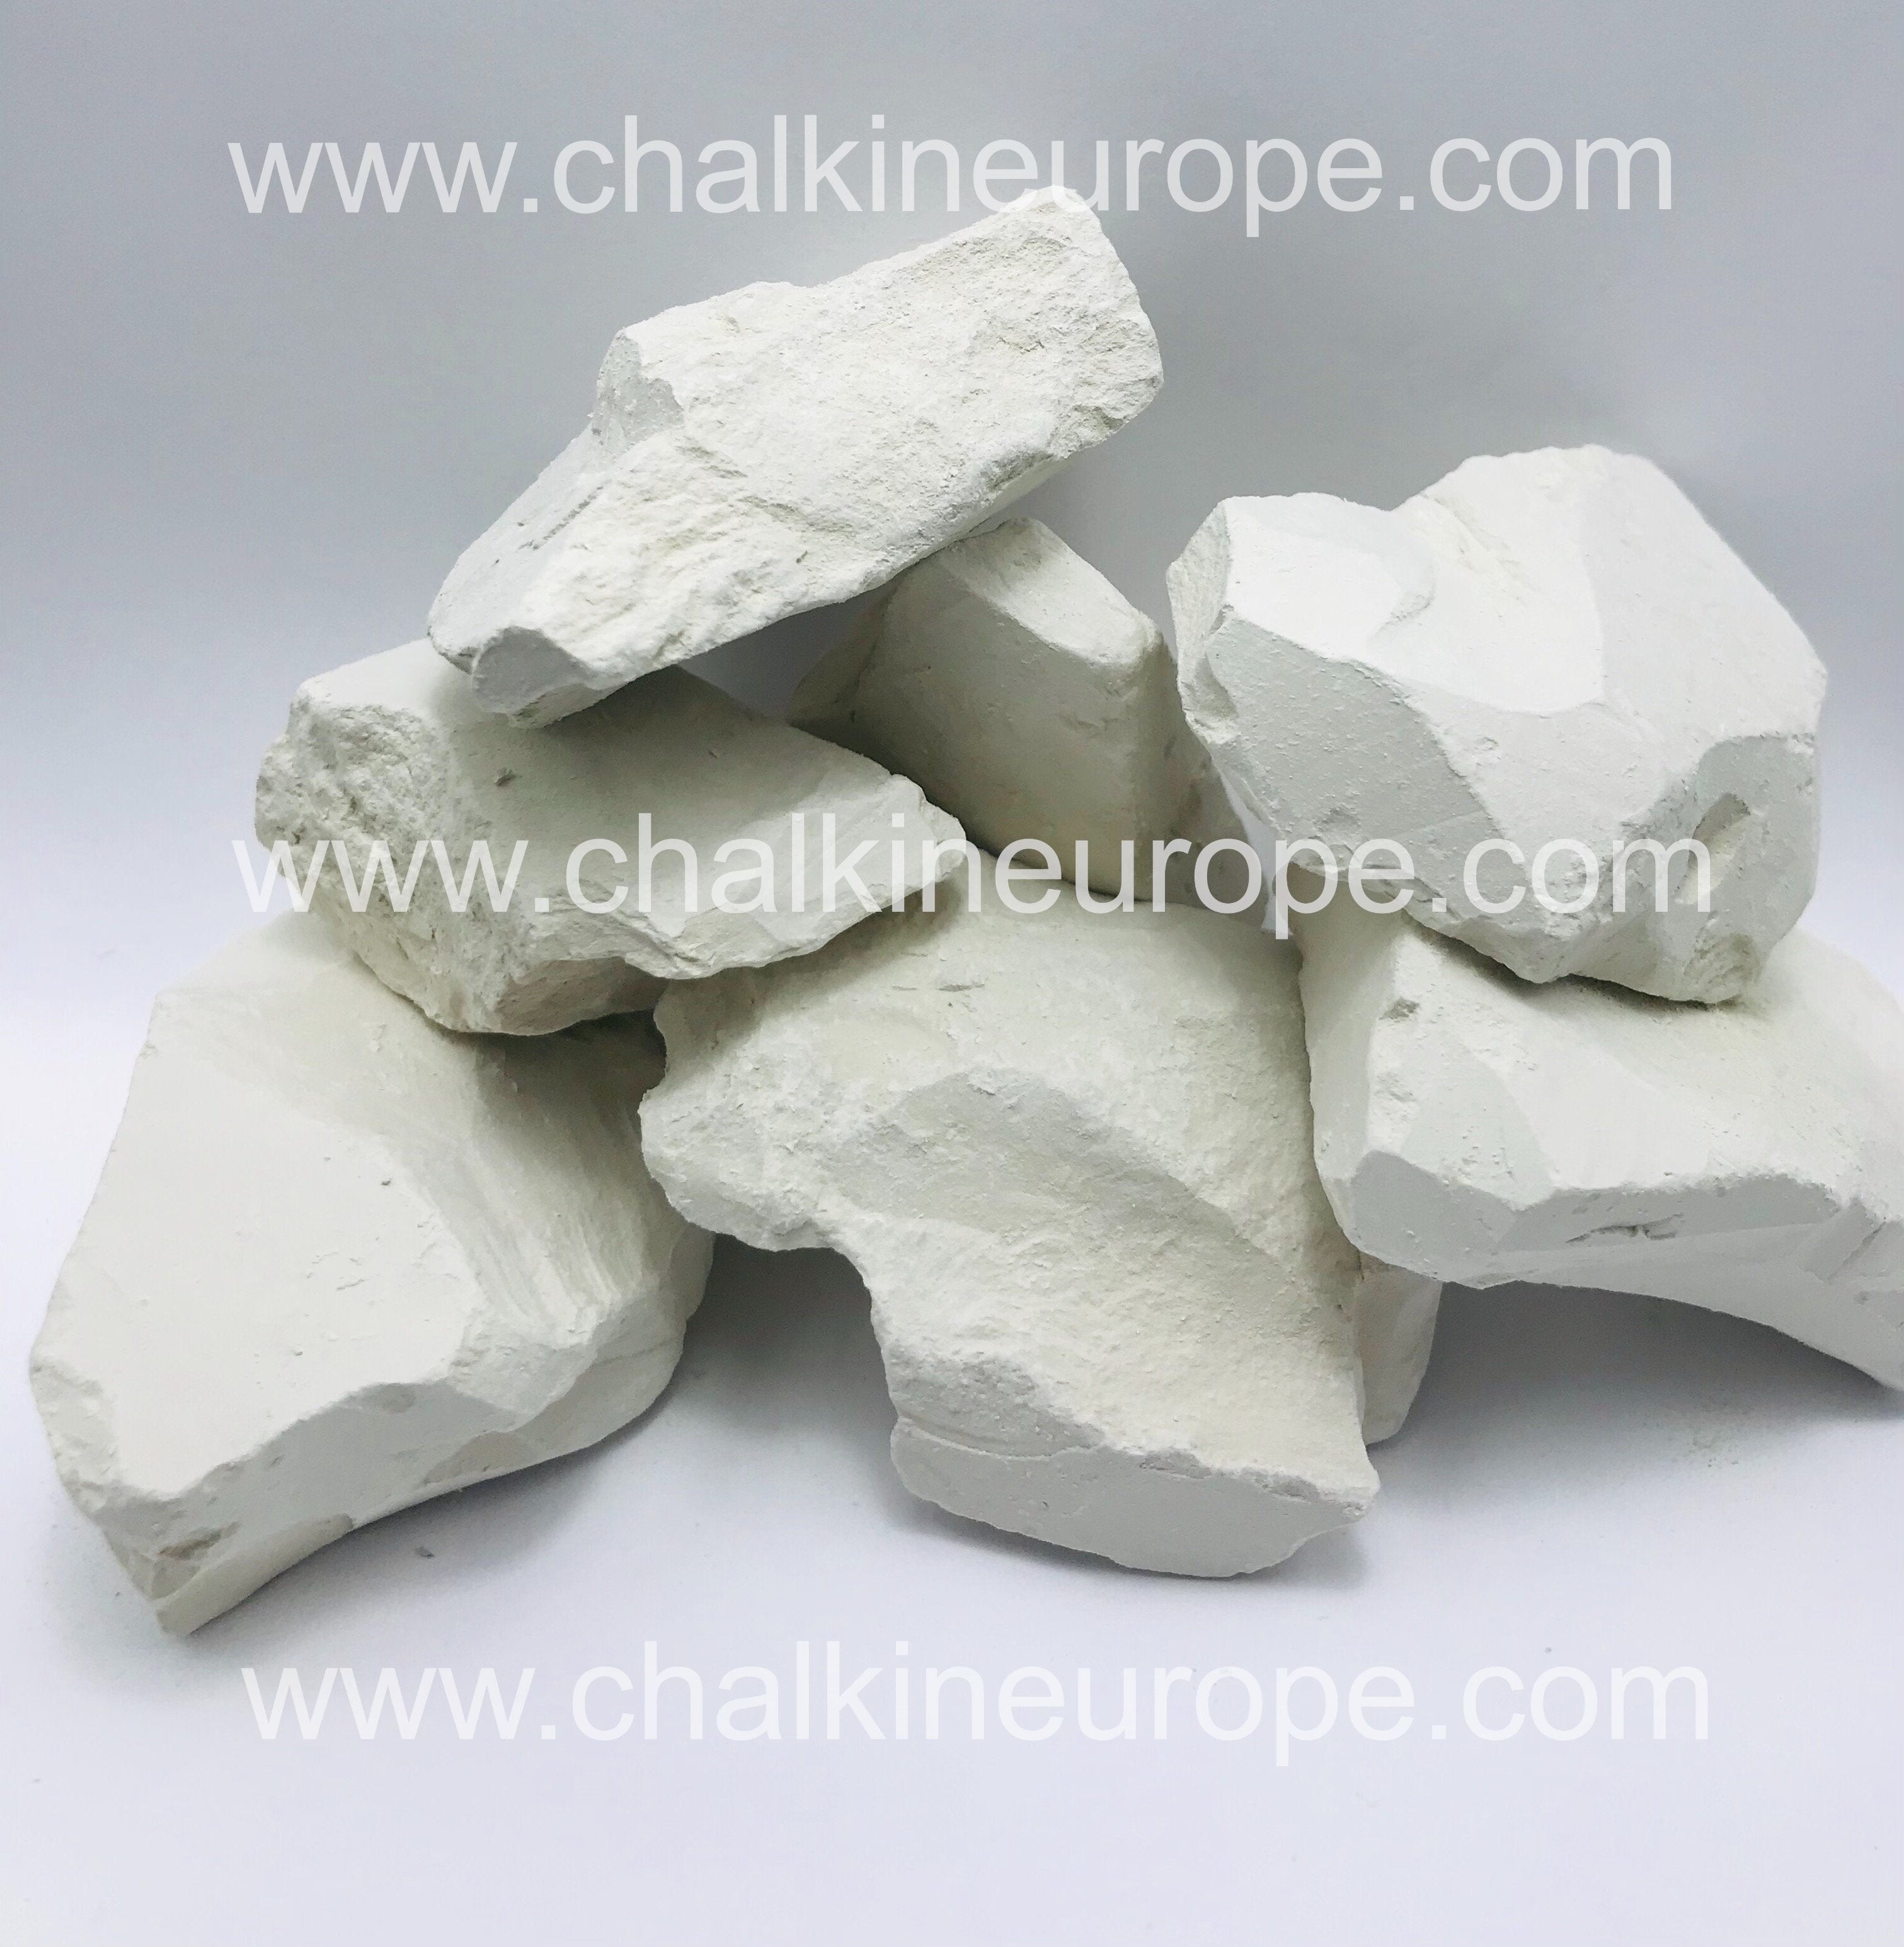 Jadalna biała glina - Chalkineurope